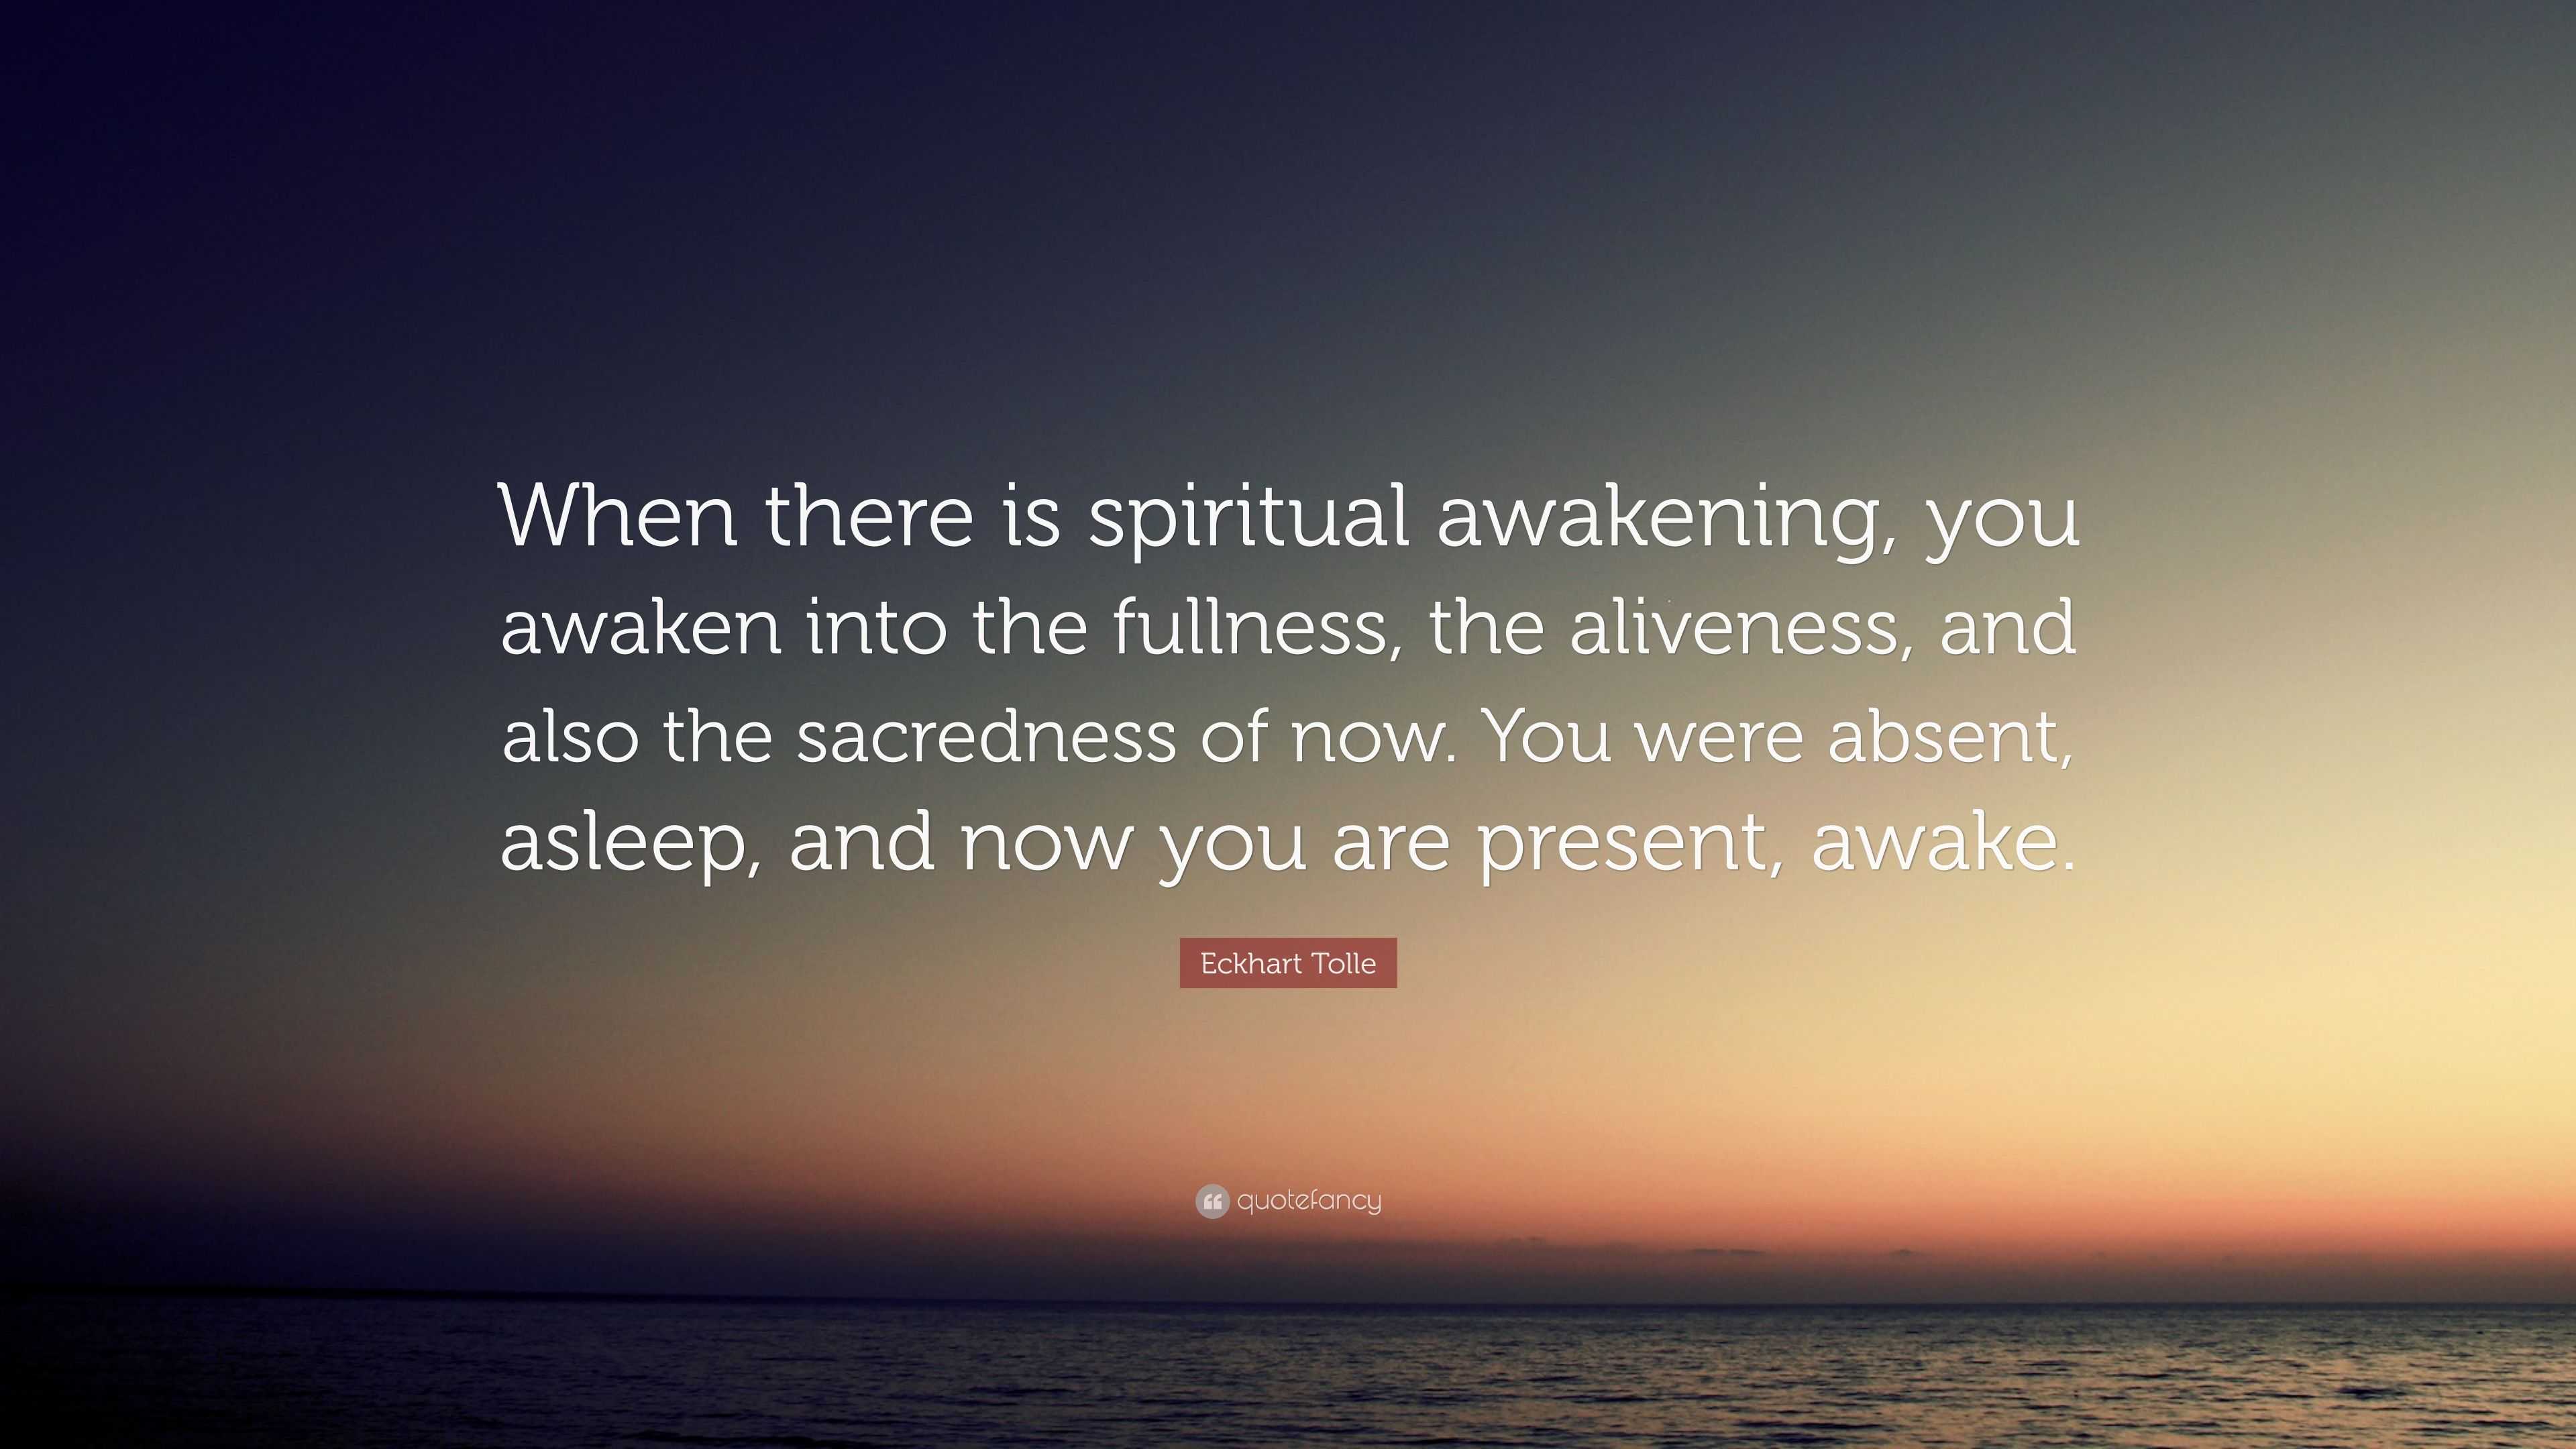 Eckhart Tolle Quote: “When there is spiritual awakening, you awaken ...